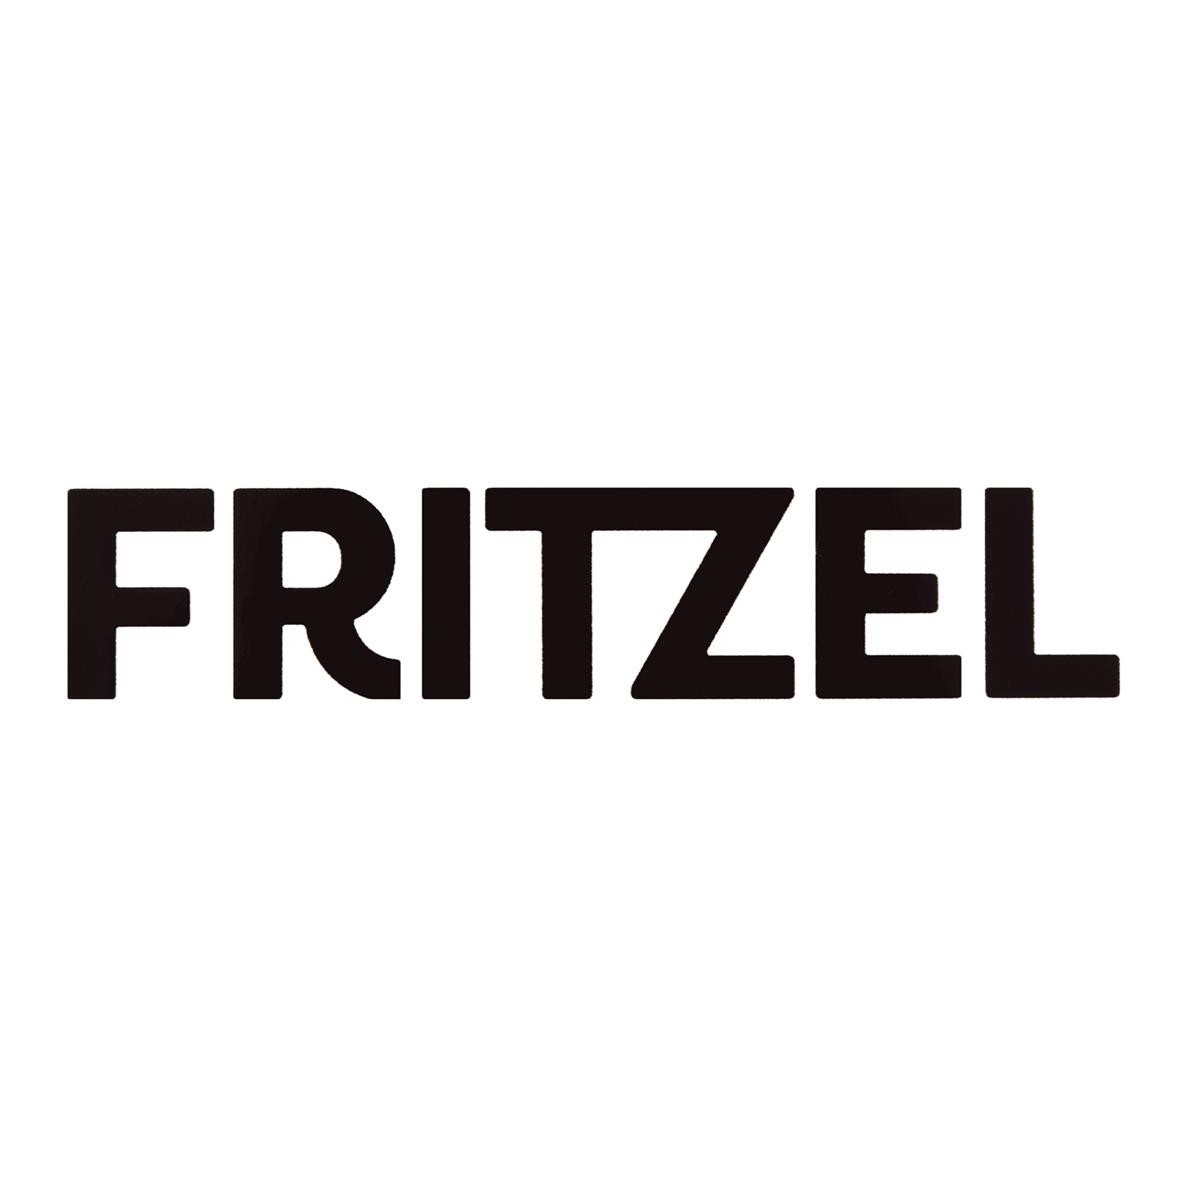 FRITZEL Sticker Logo Black - 10.5 cm